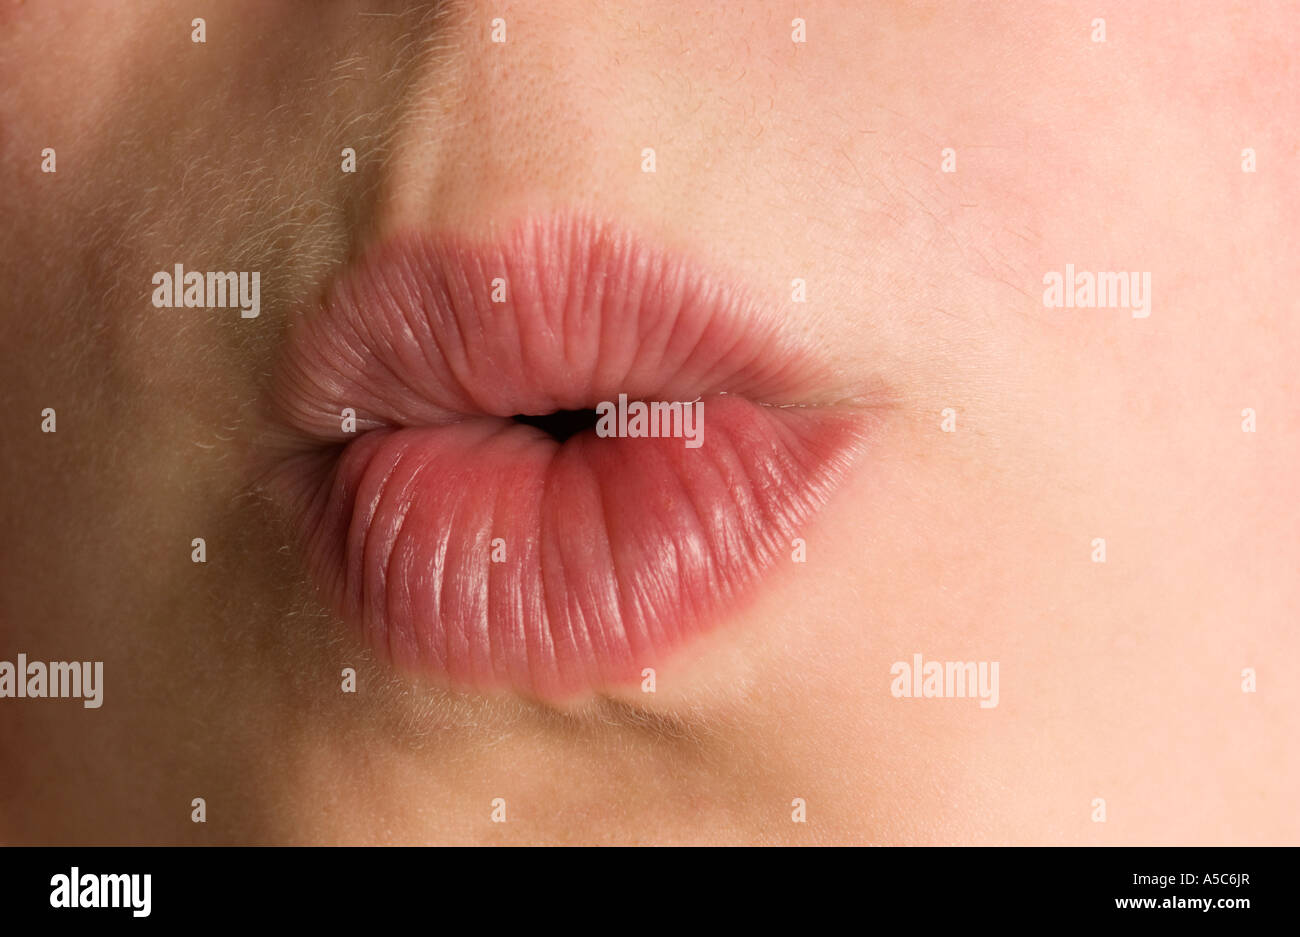 Teenage girl pursing lips to whistle Stock Photo